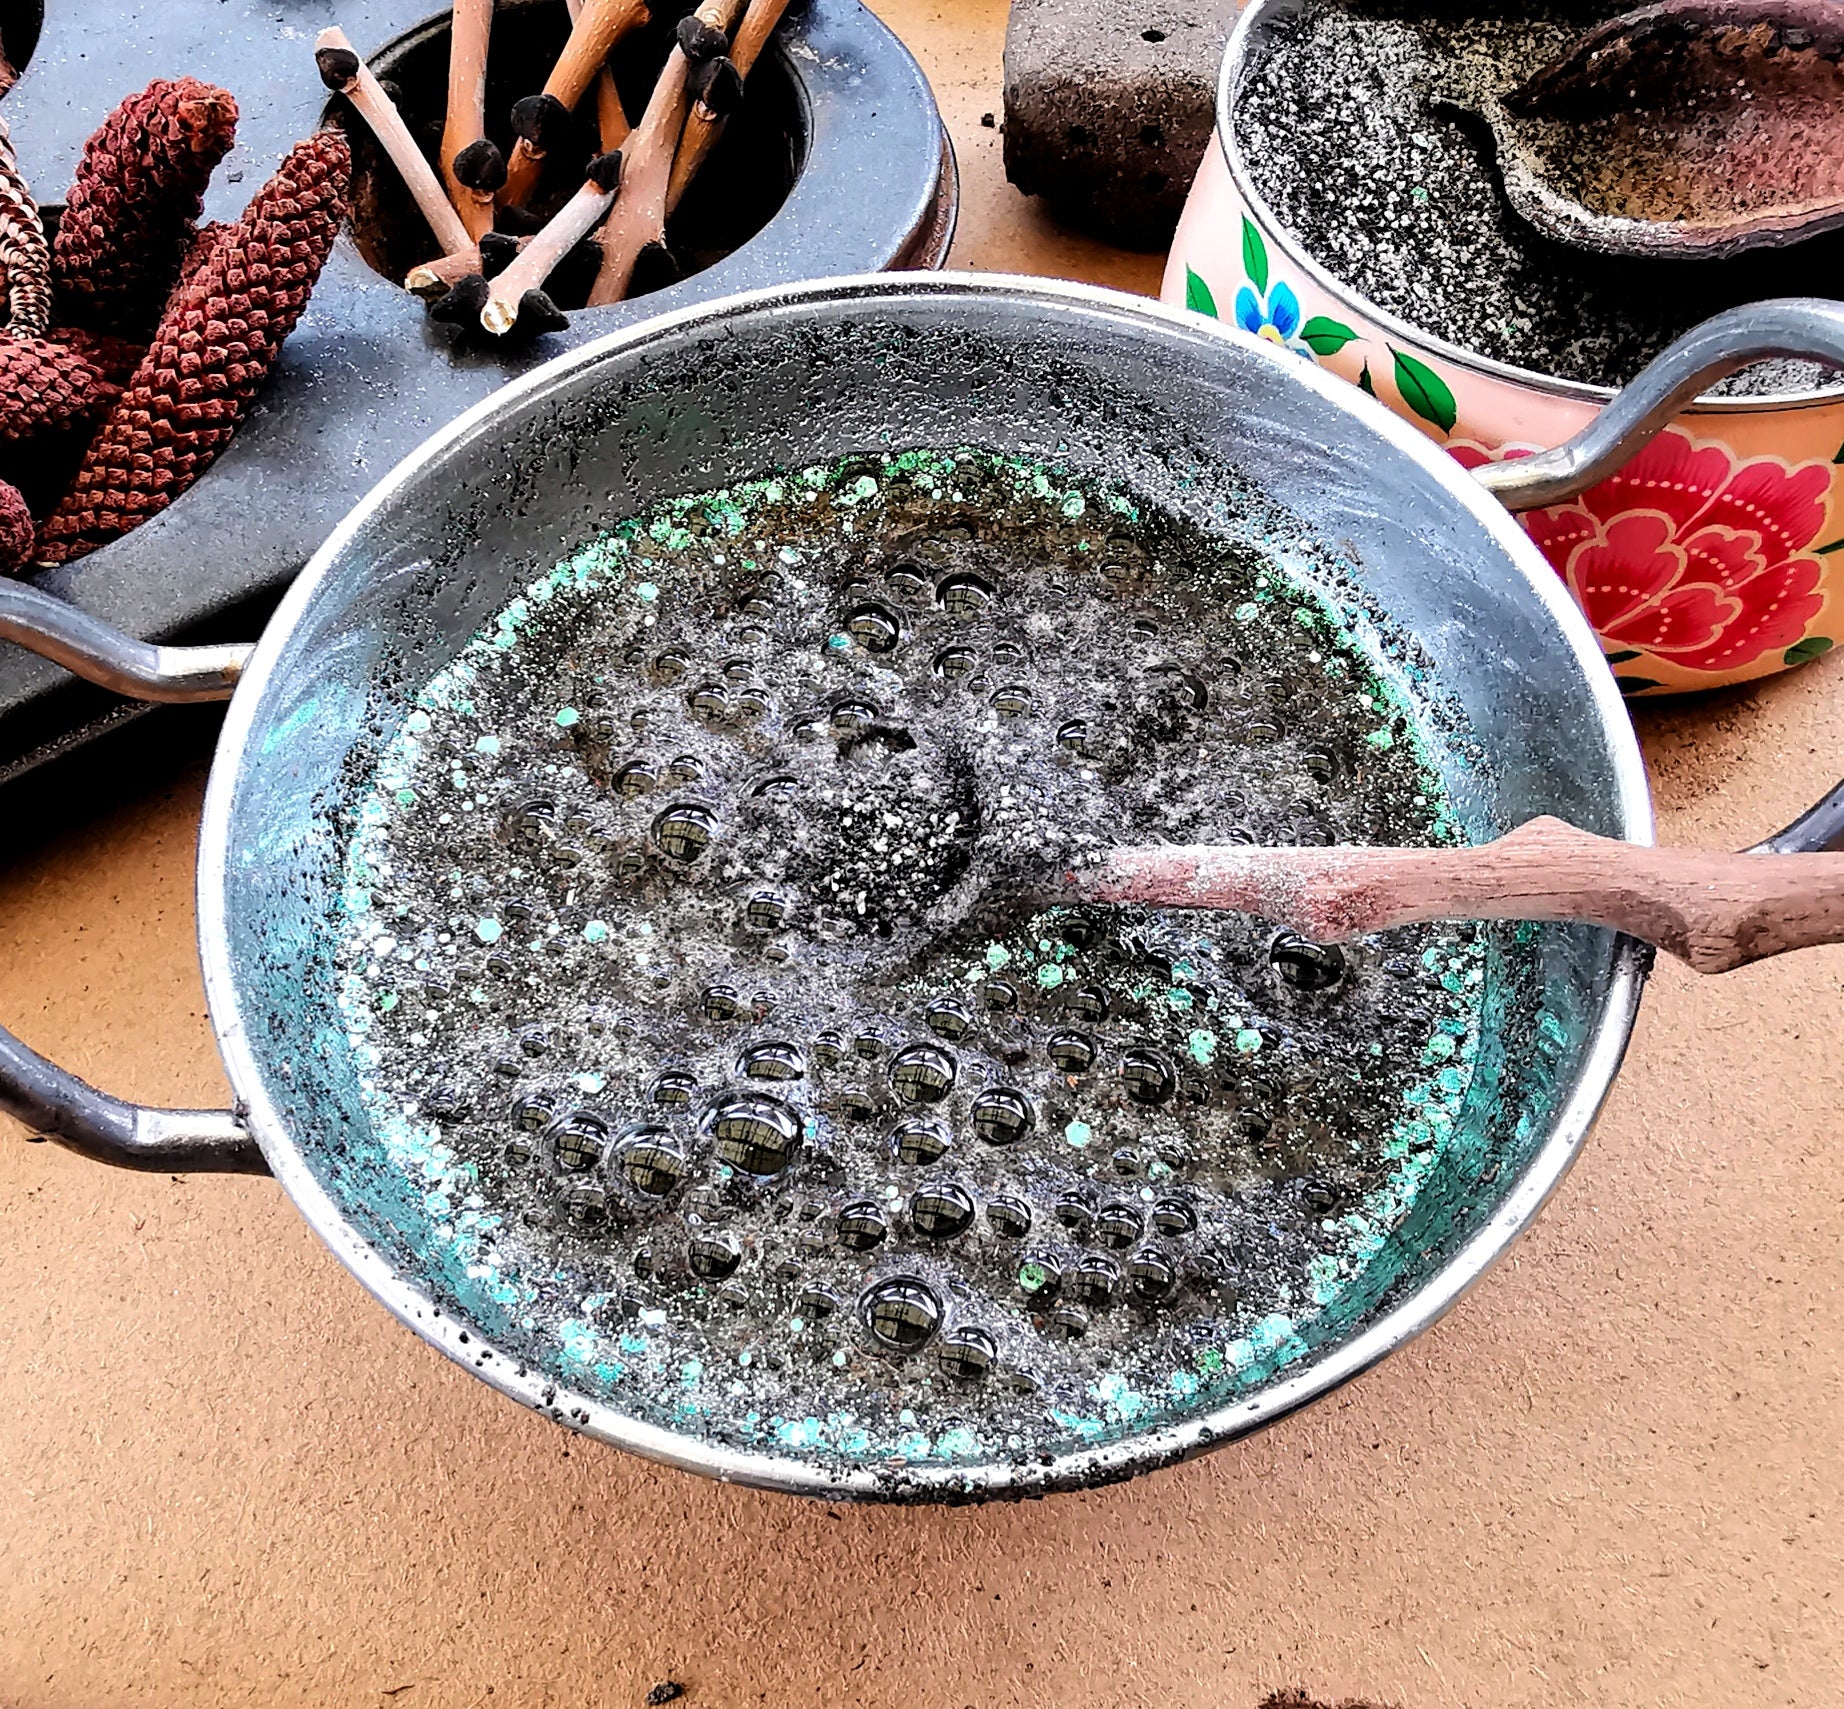 MakeMUD Slime powder – Muddly Puddly Laboratory